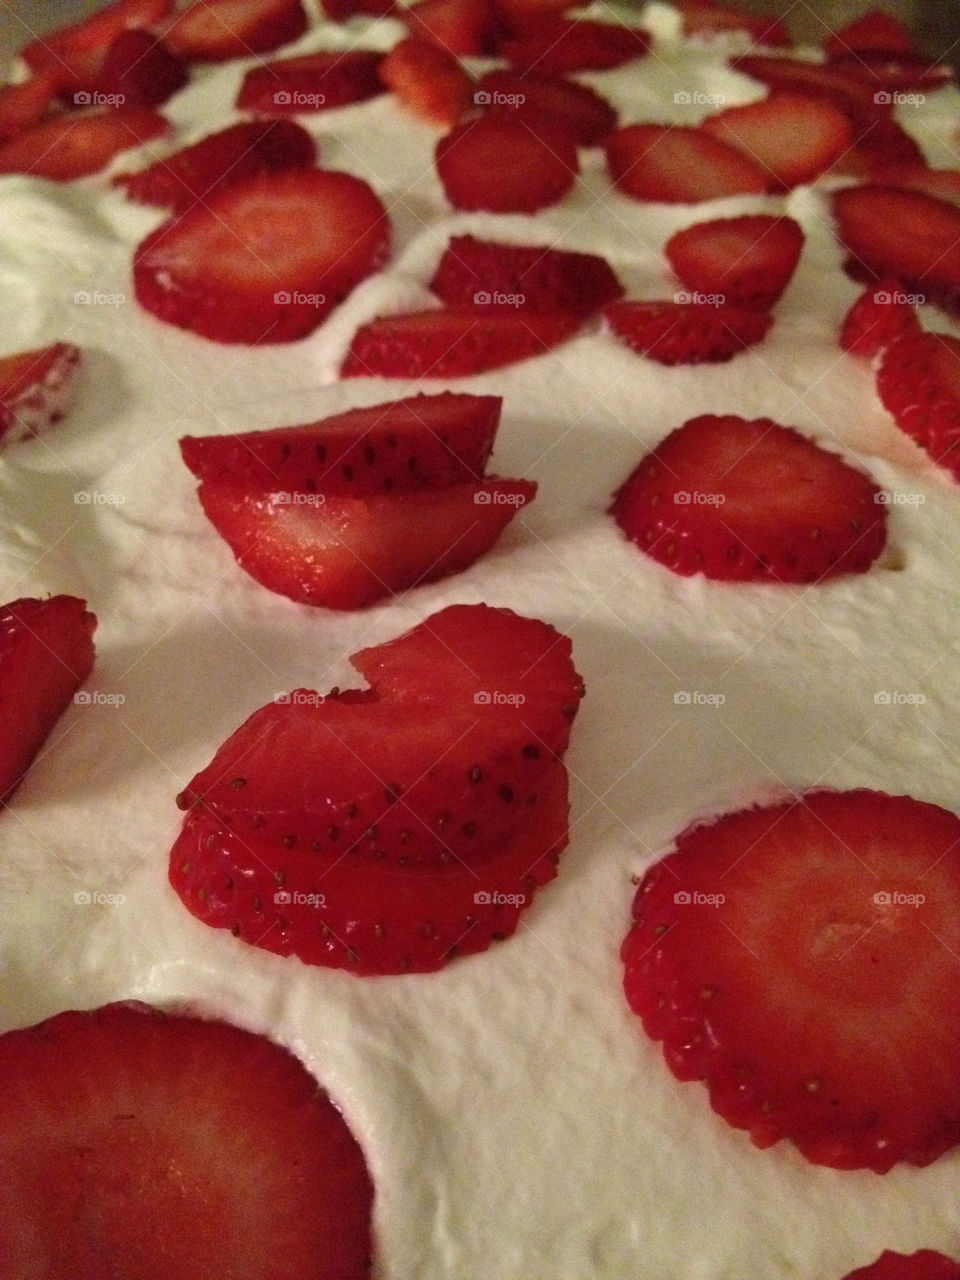 italy cake cream fruit by randi_richards